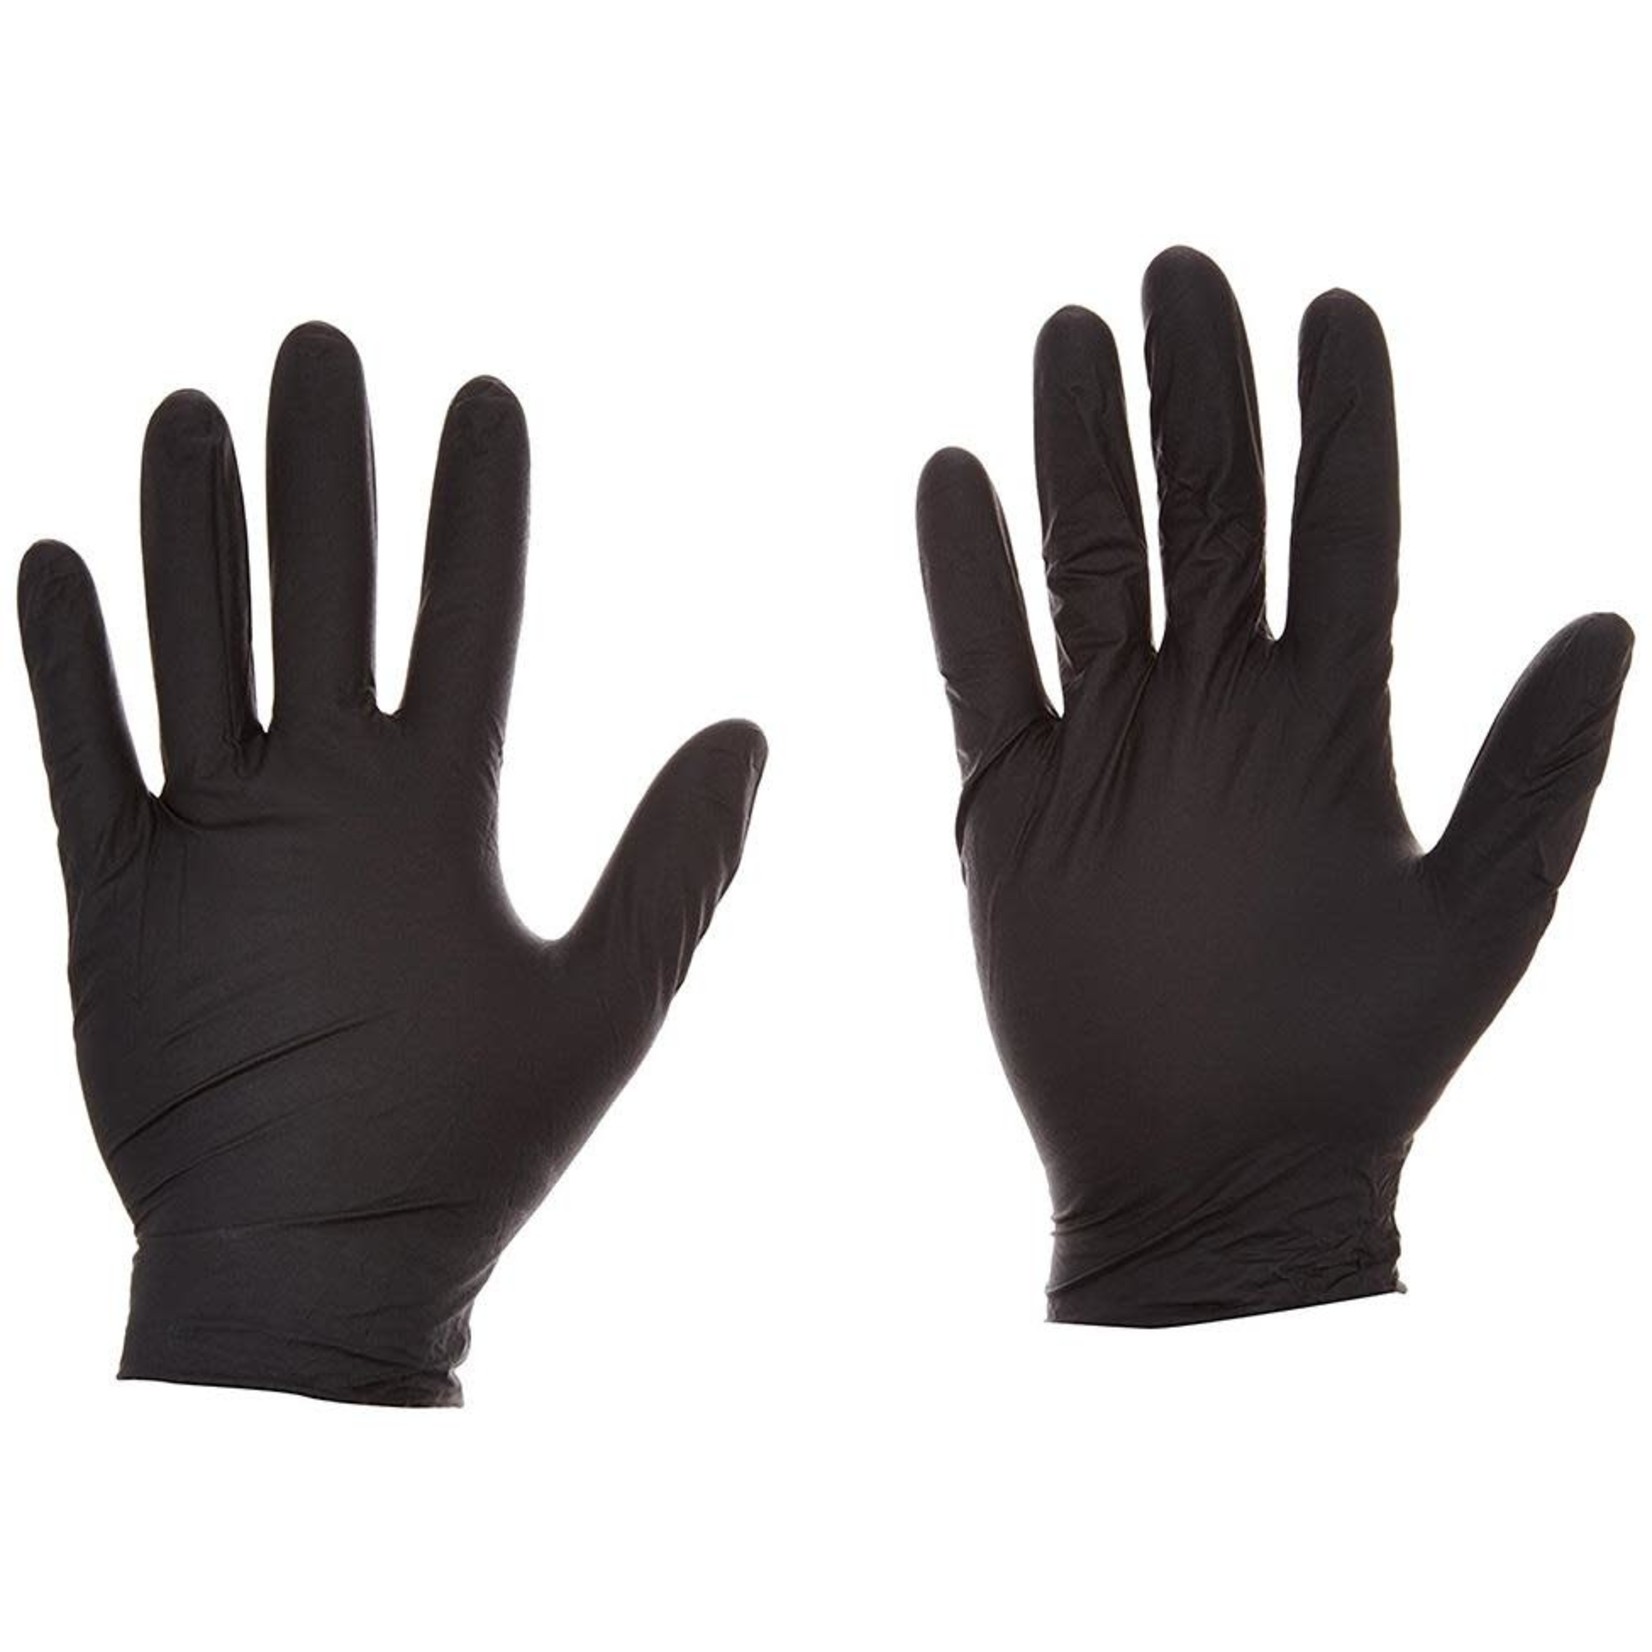 Hand Armor Hand Armor Nitrile 5Mil Powder-Free Gloves Black S